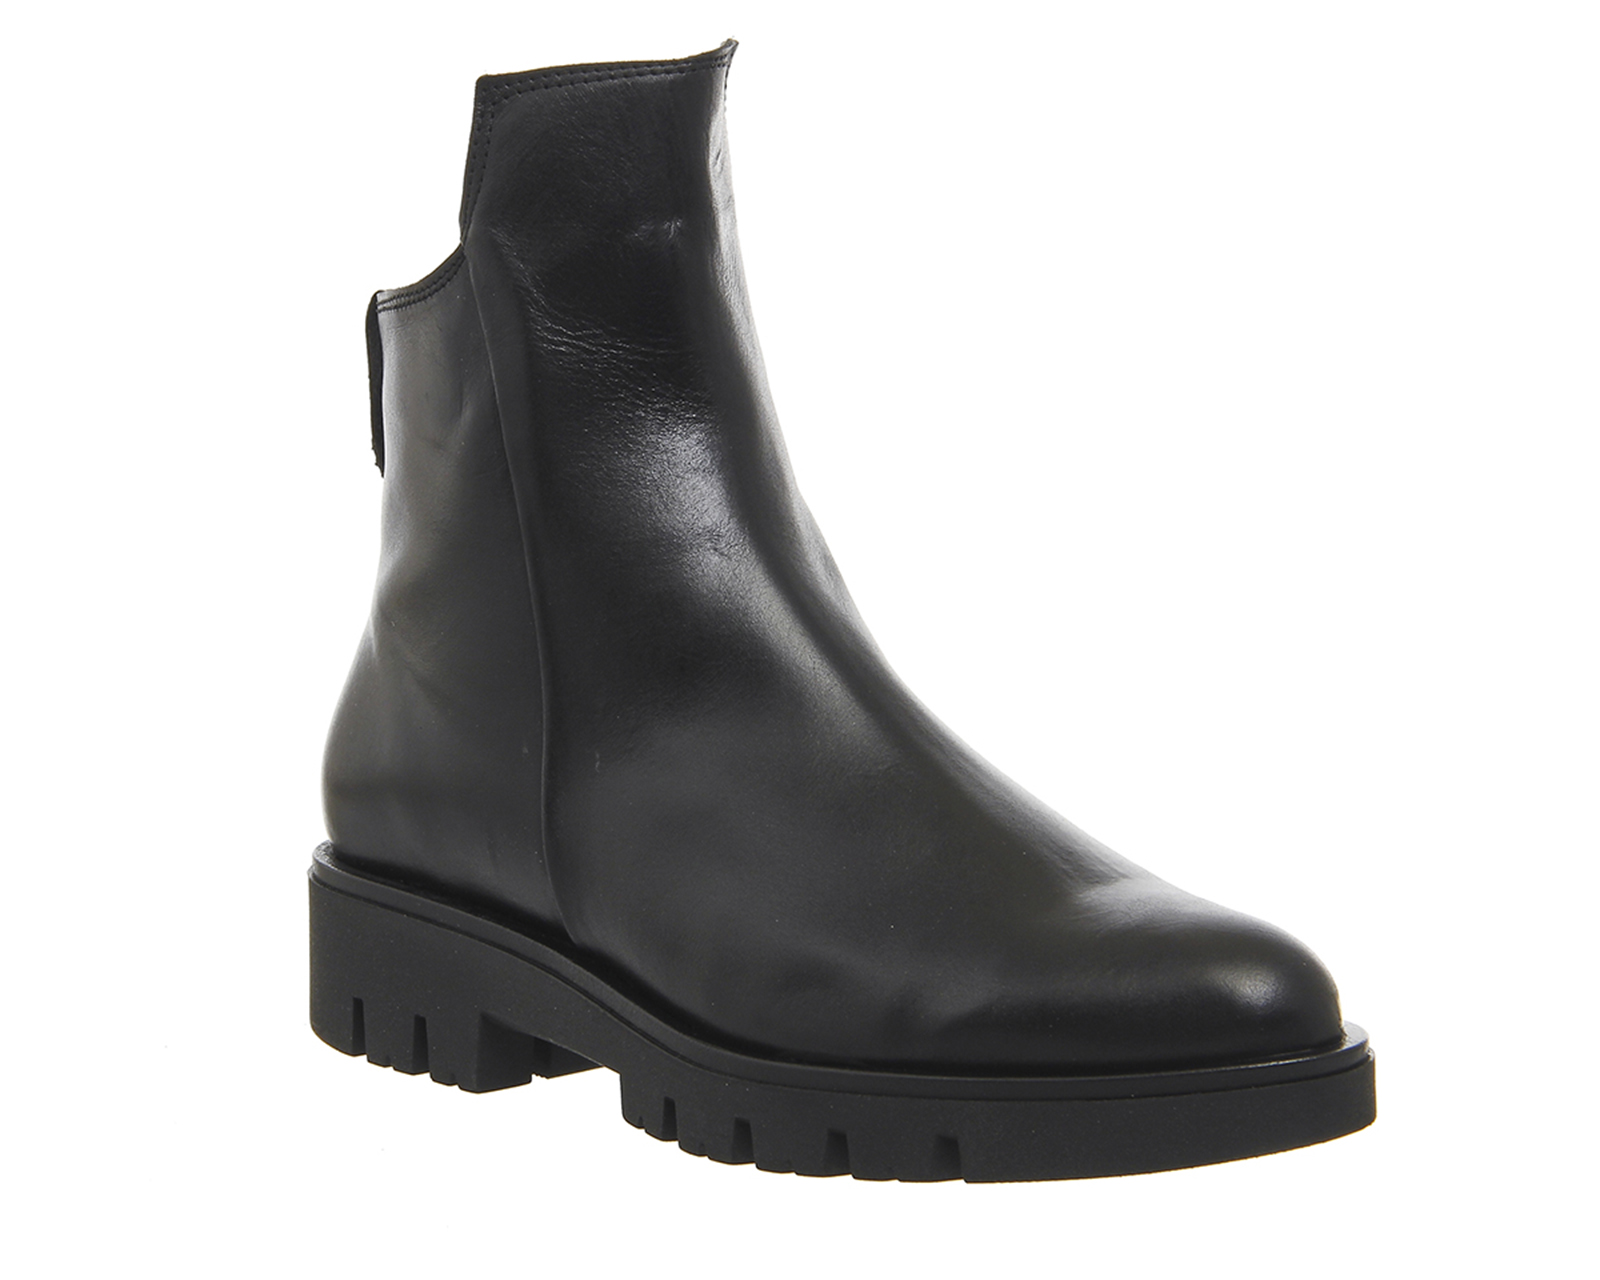 Gaimo for OFFICEGabriella Ankle BootsBlack Leather